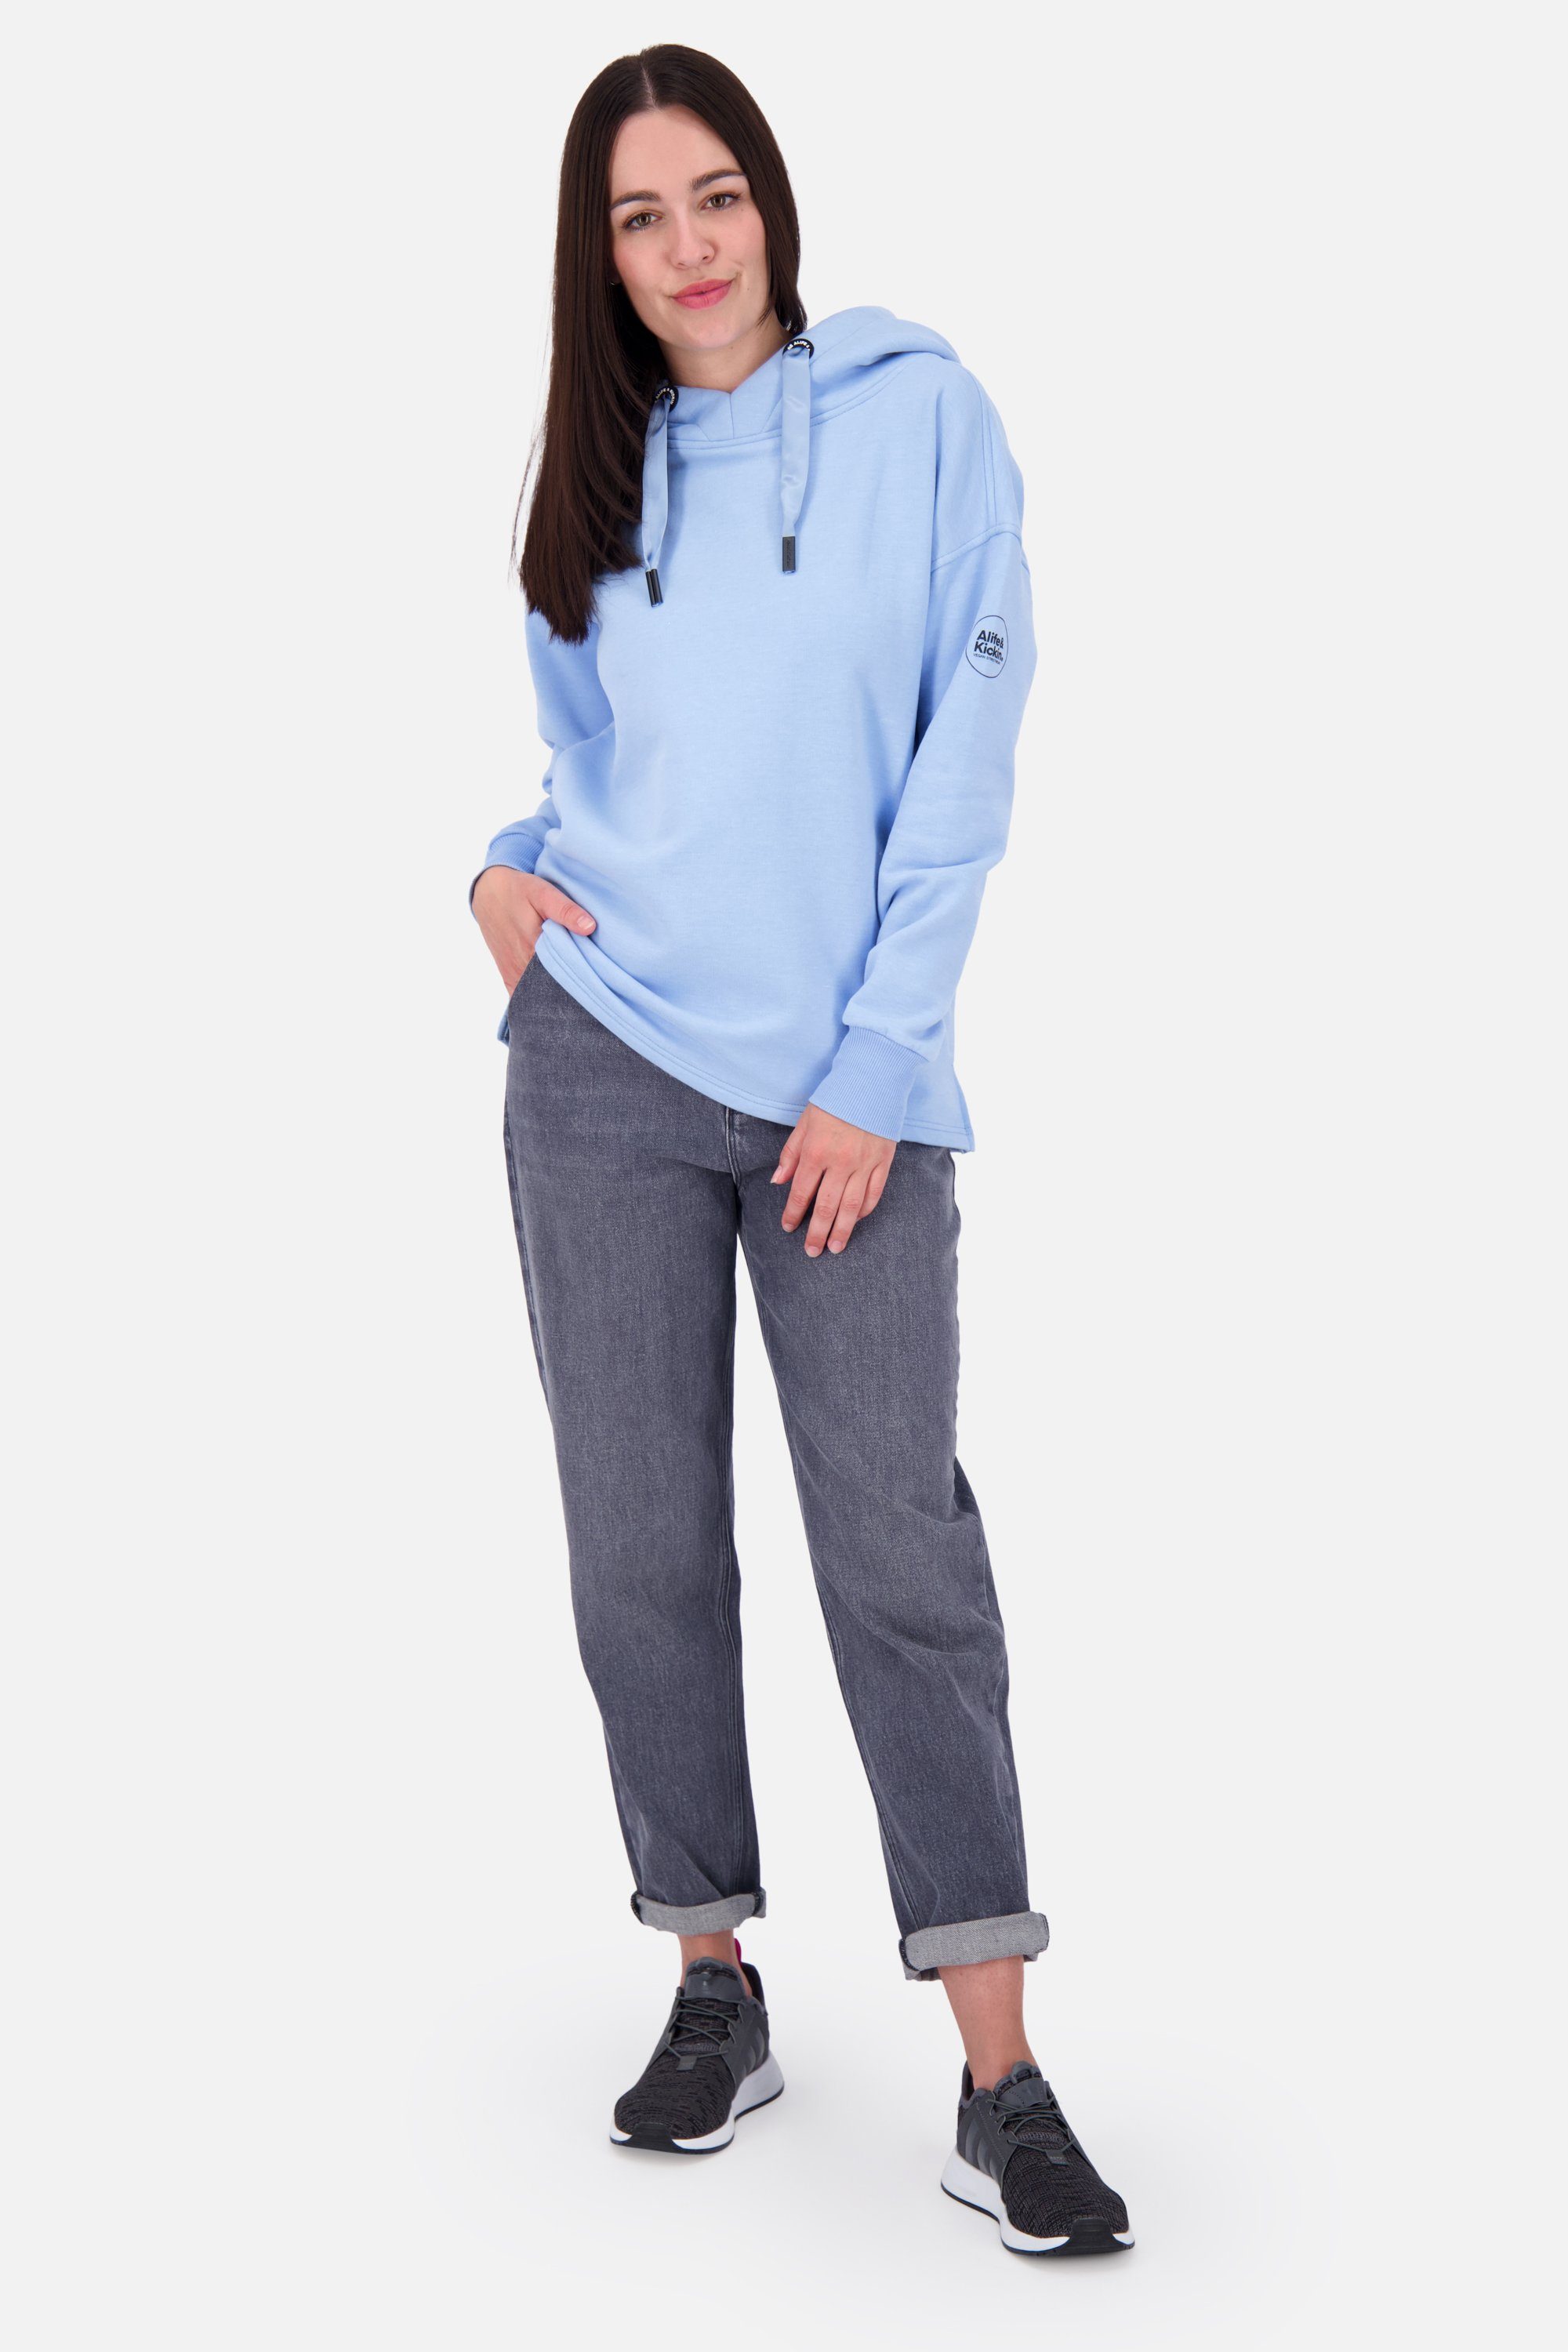 Alife A Kapuzensweatshirt, Kickin & Kapuzensweatshirt Pullover JessicaAK Damen fjord Sweatshirt melange Hoodie